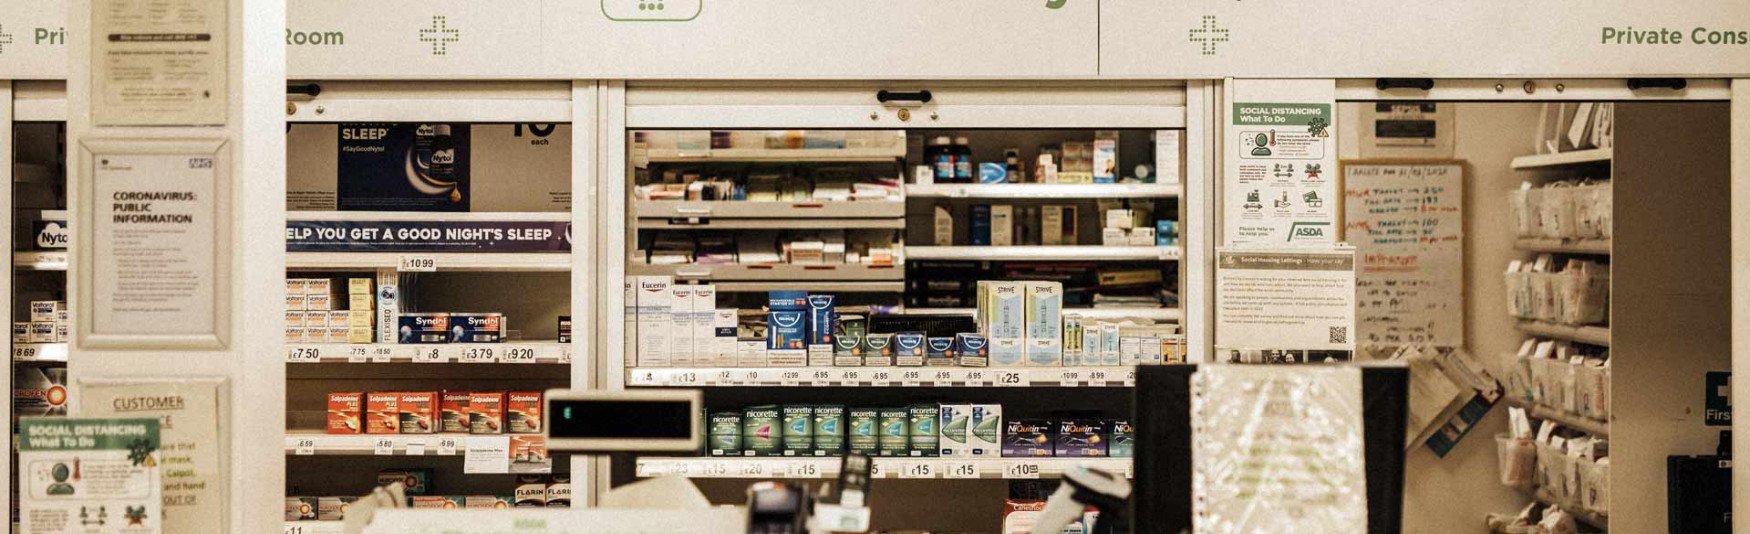 pharmacy stocked with medicines